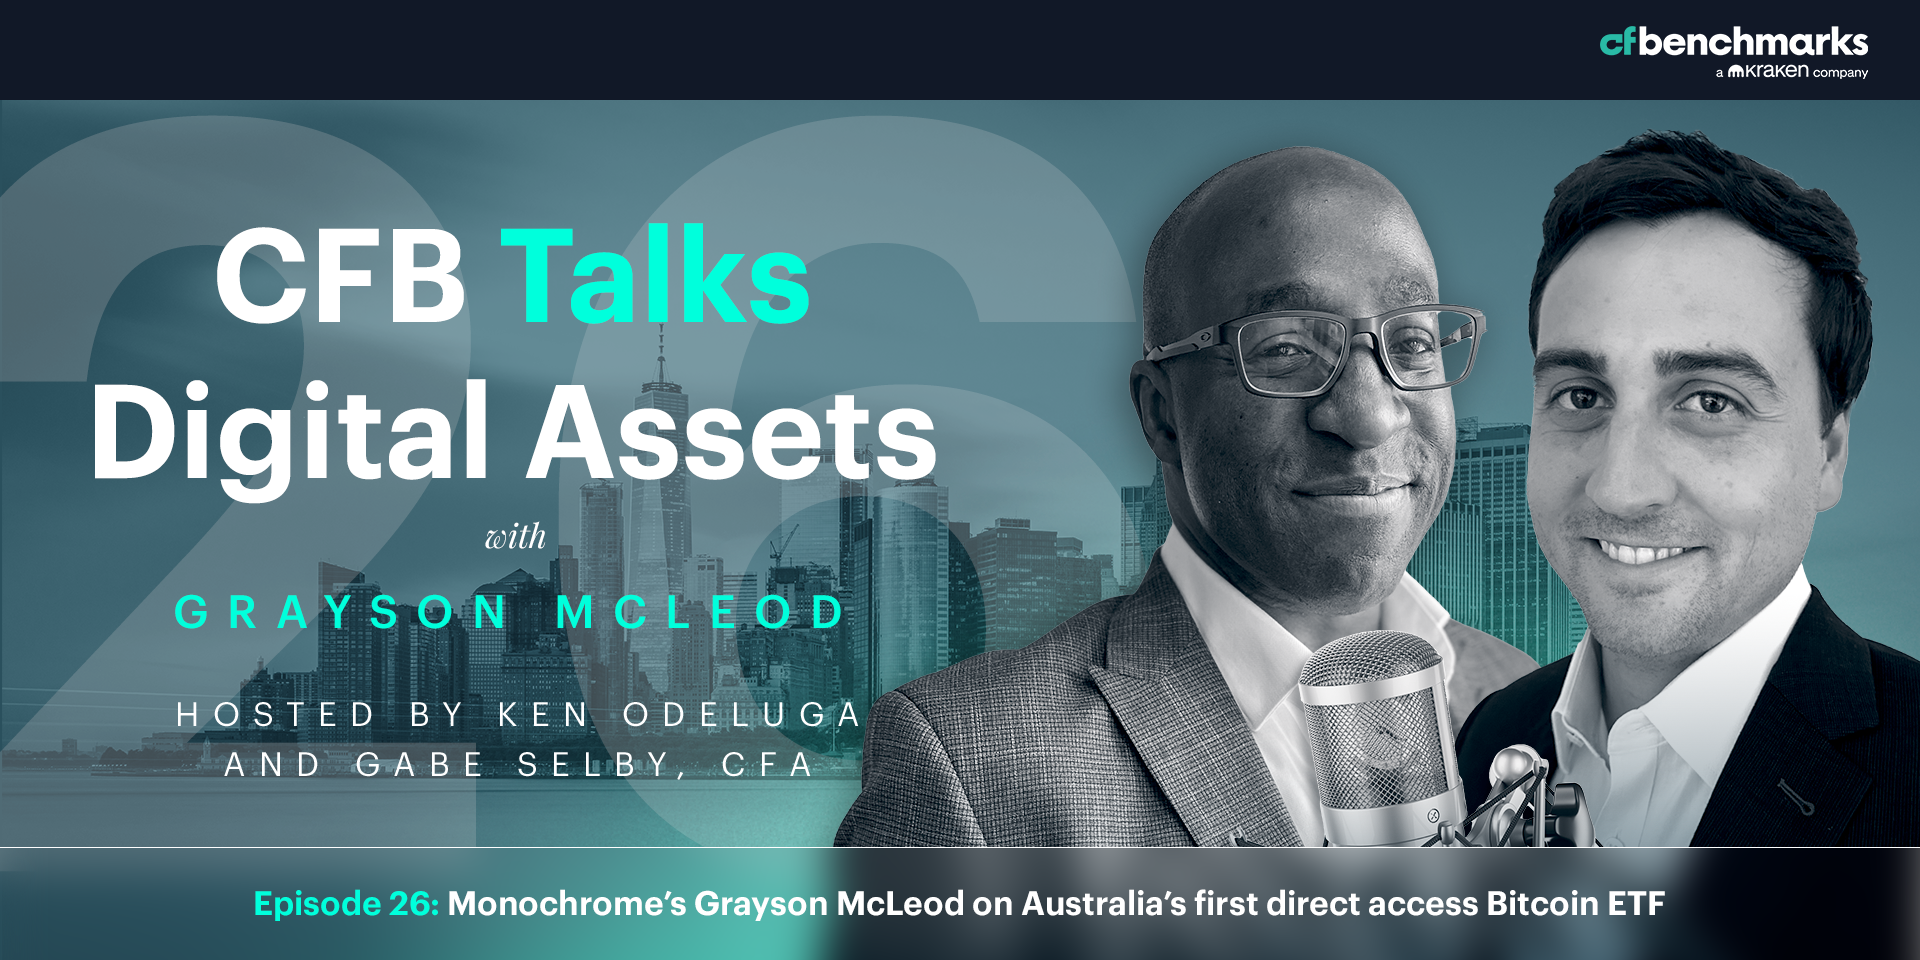 CFB Talks Digital Assets Episode 26: Monochrome's Grayson McLeod on Australia's first direct access Bitcoin ETF